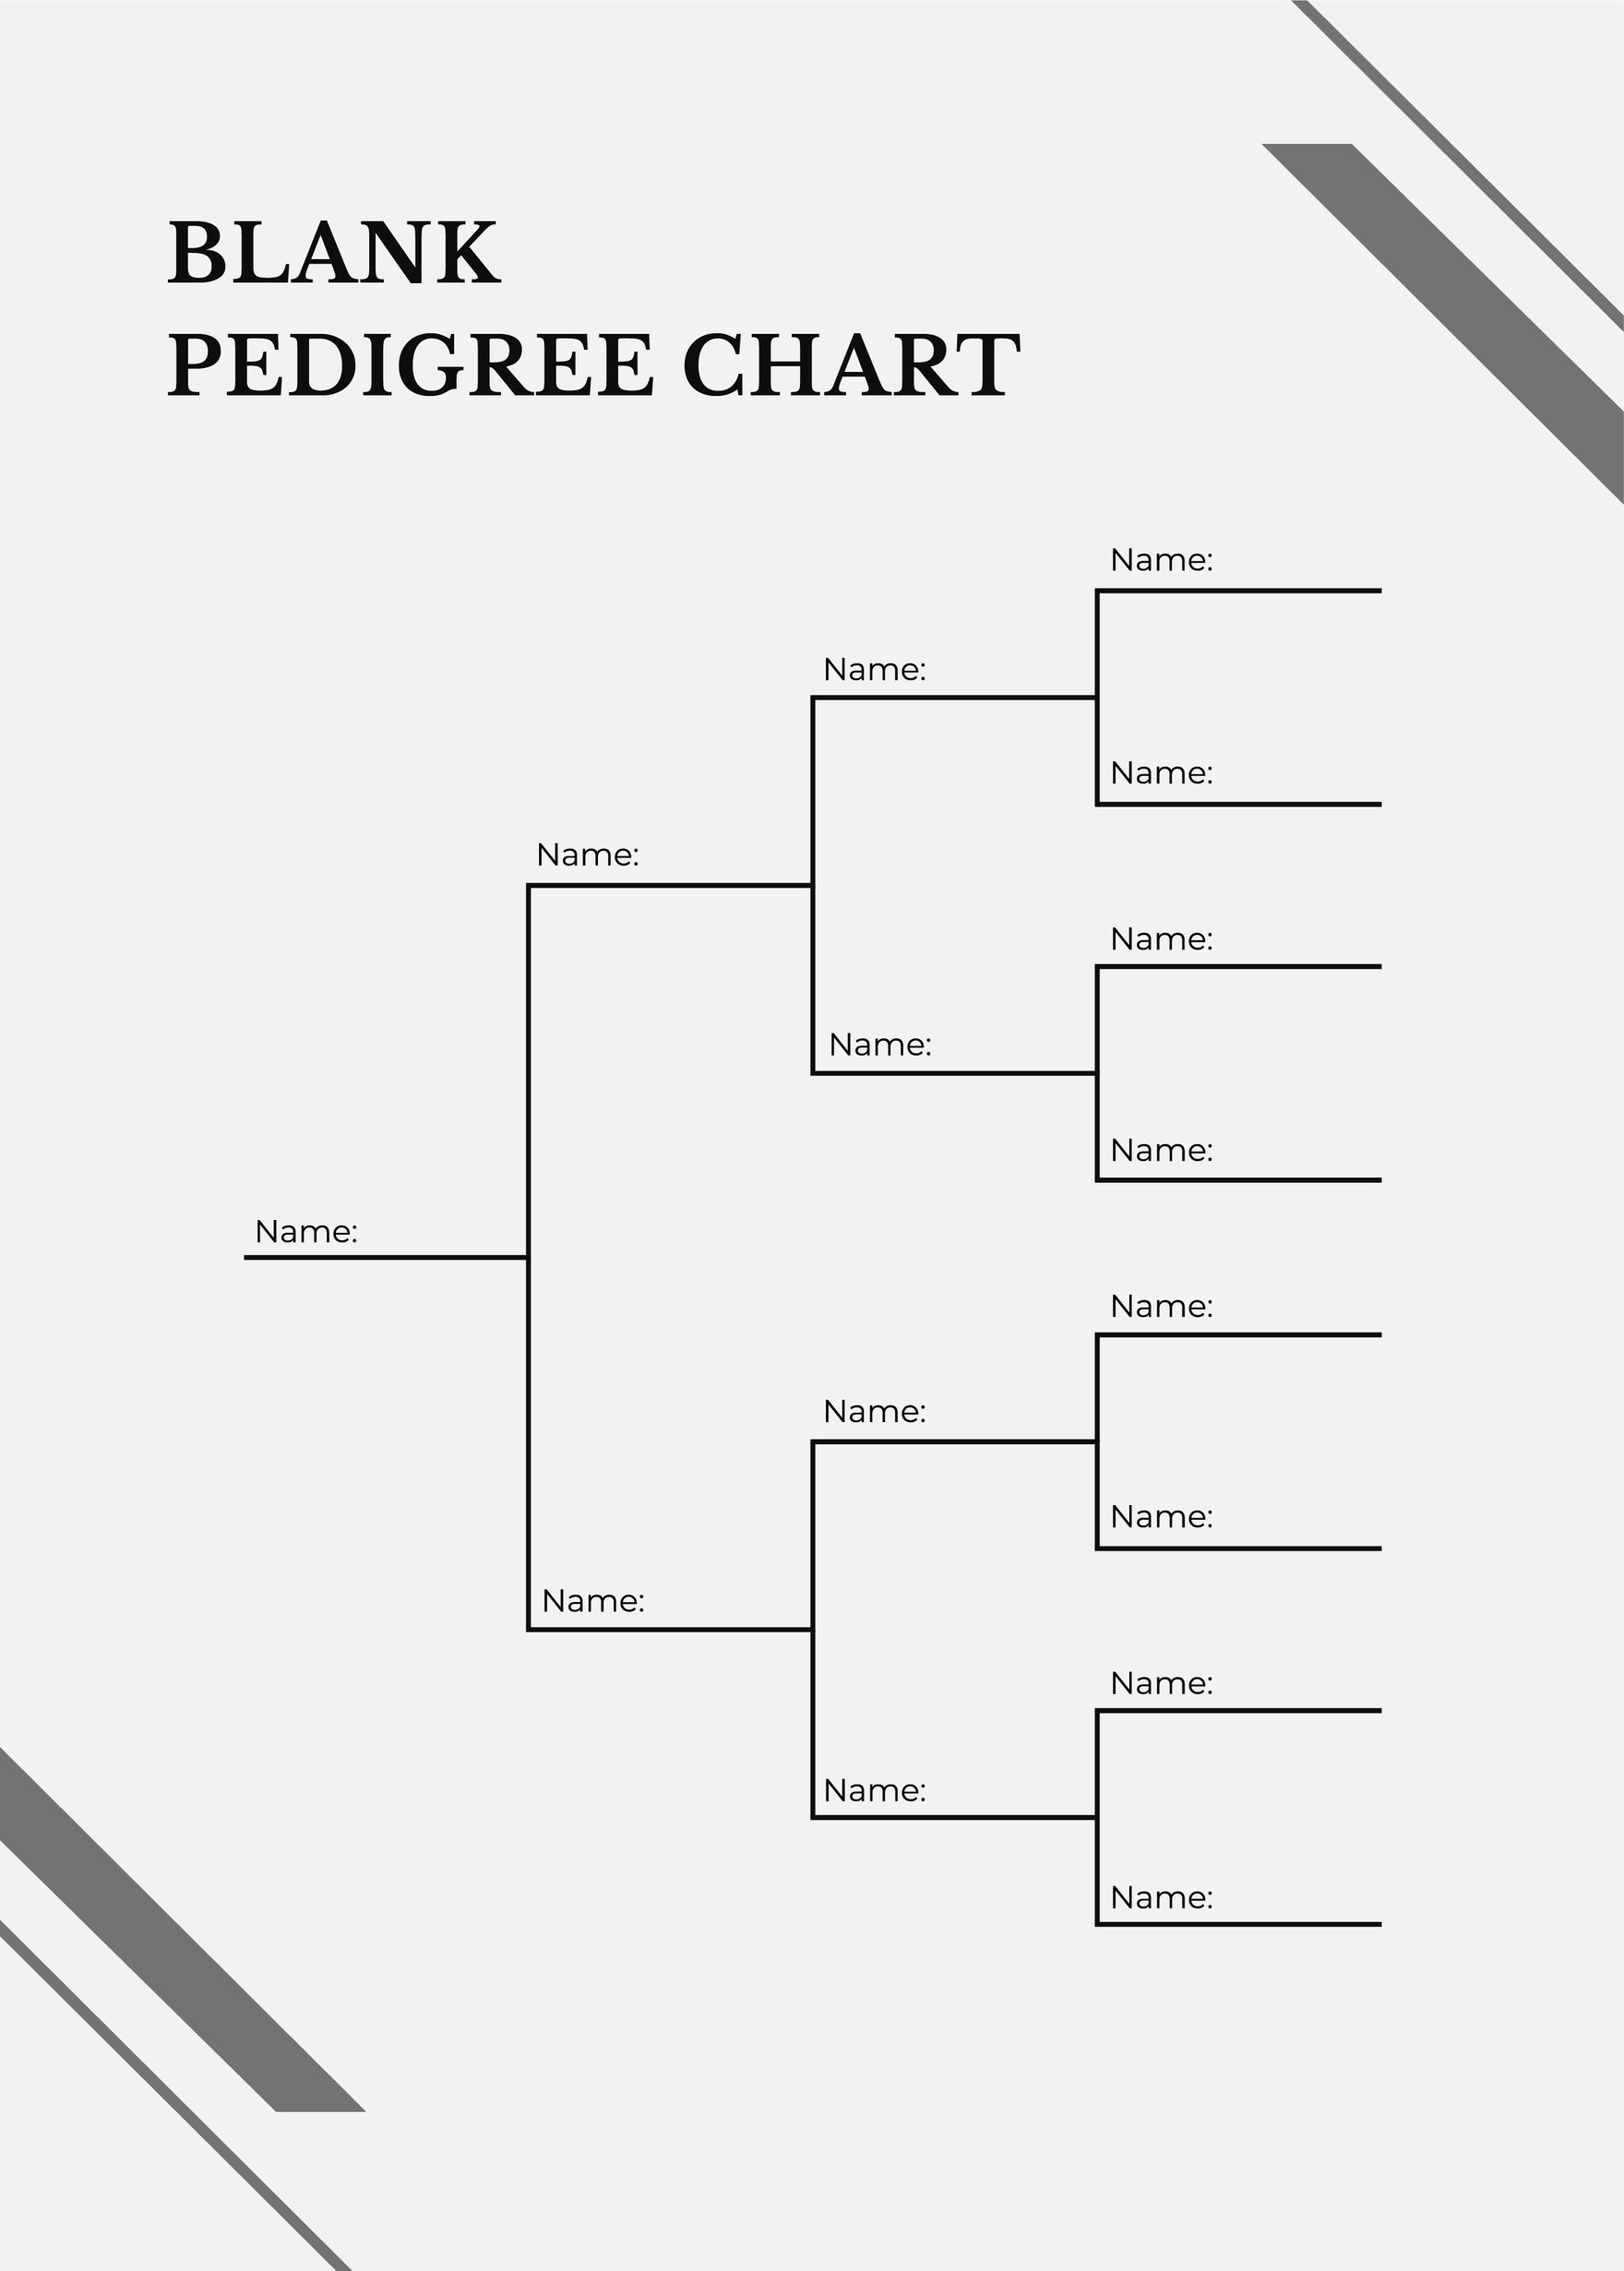 Blank Pedigree Chart